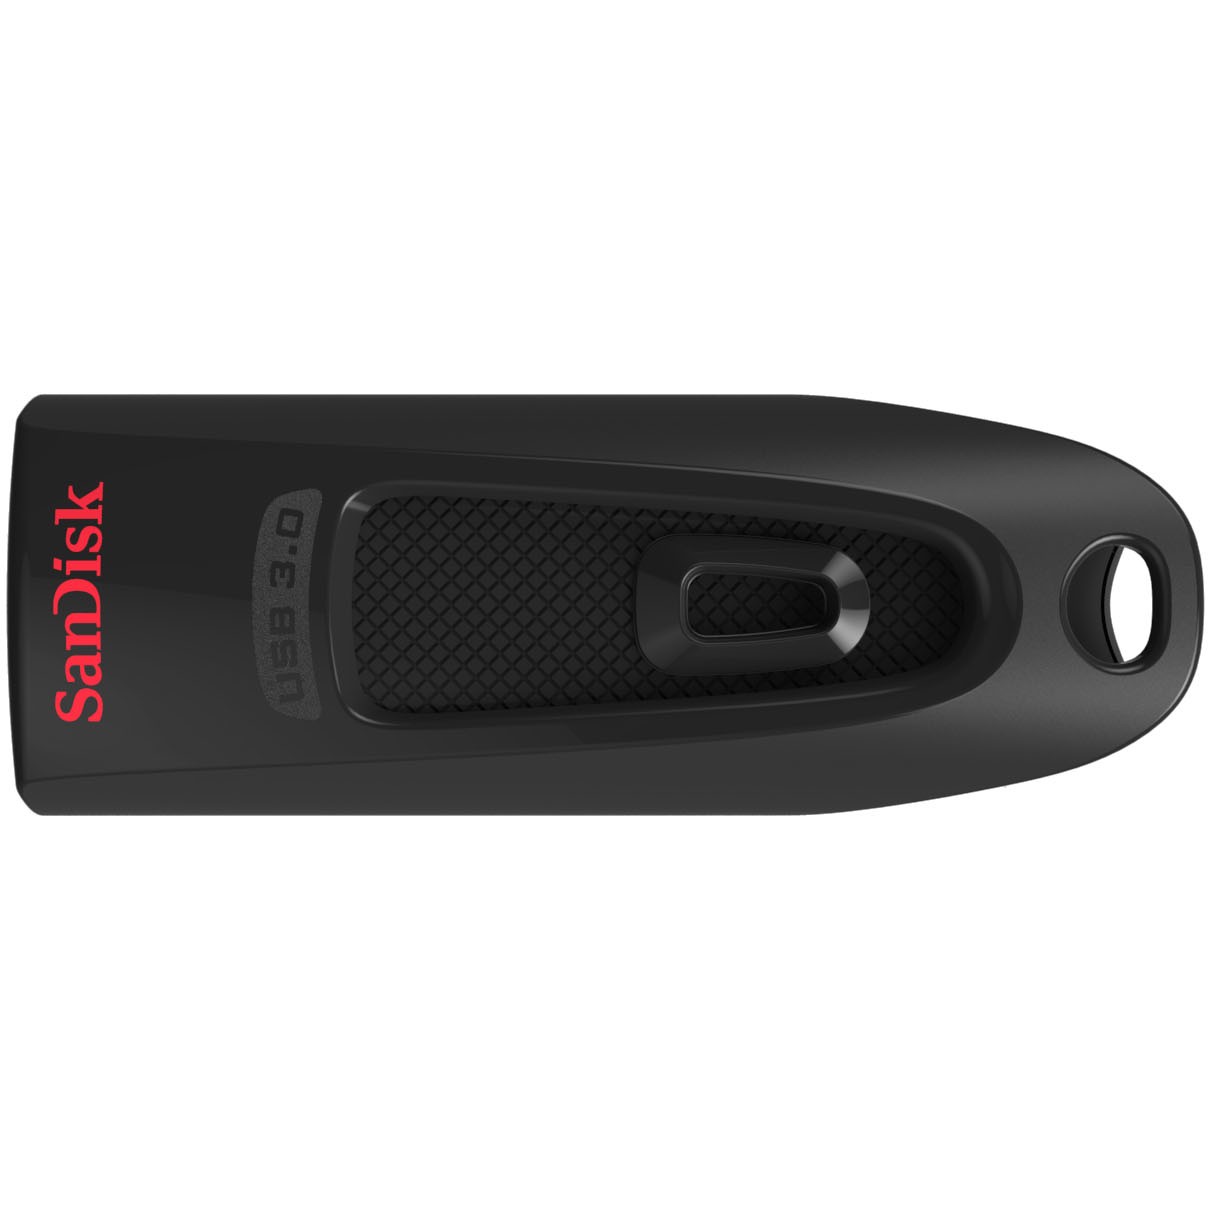 Sandisk SDCZ48-064G-U46, USB-Stick, SanDisk Ultra USB  (BILD6)